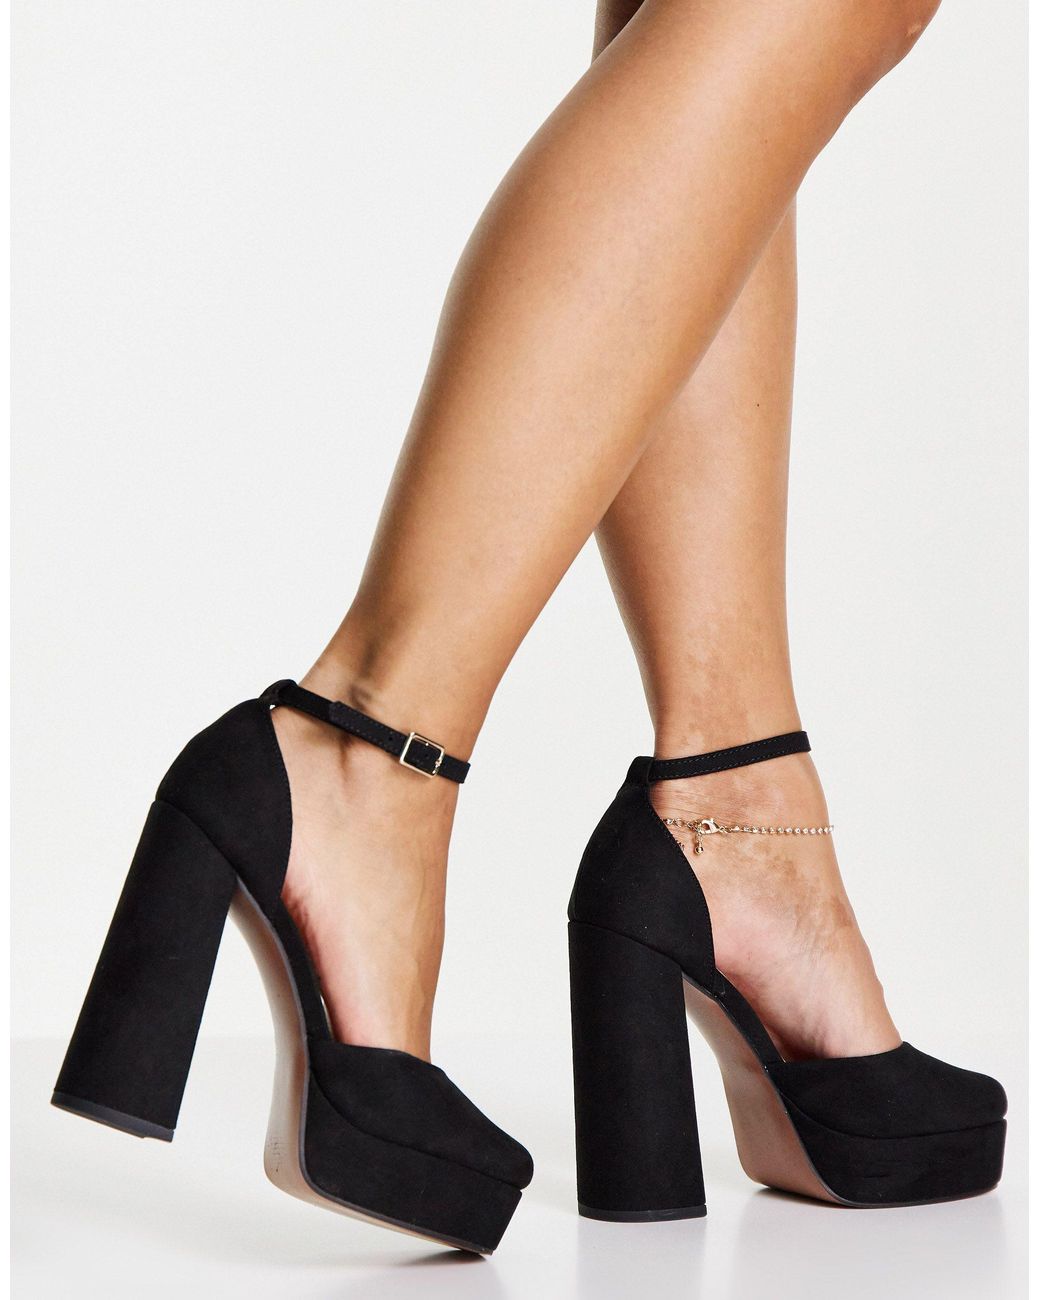 ASOS Pronto Platform High Heeled Shoes in Black Womens Shoes Heels Sandal heels 